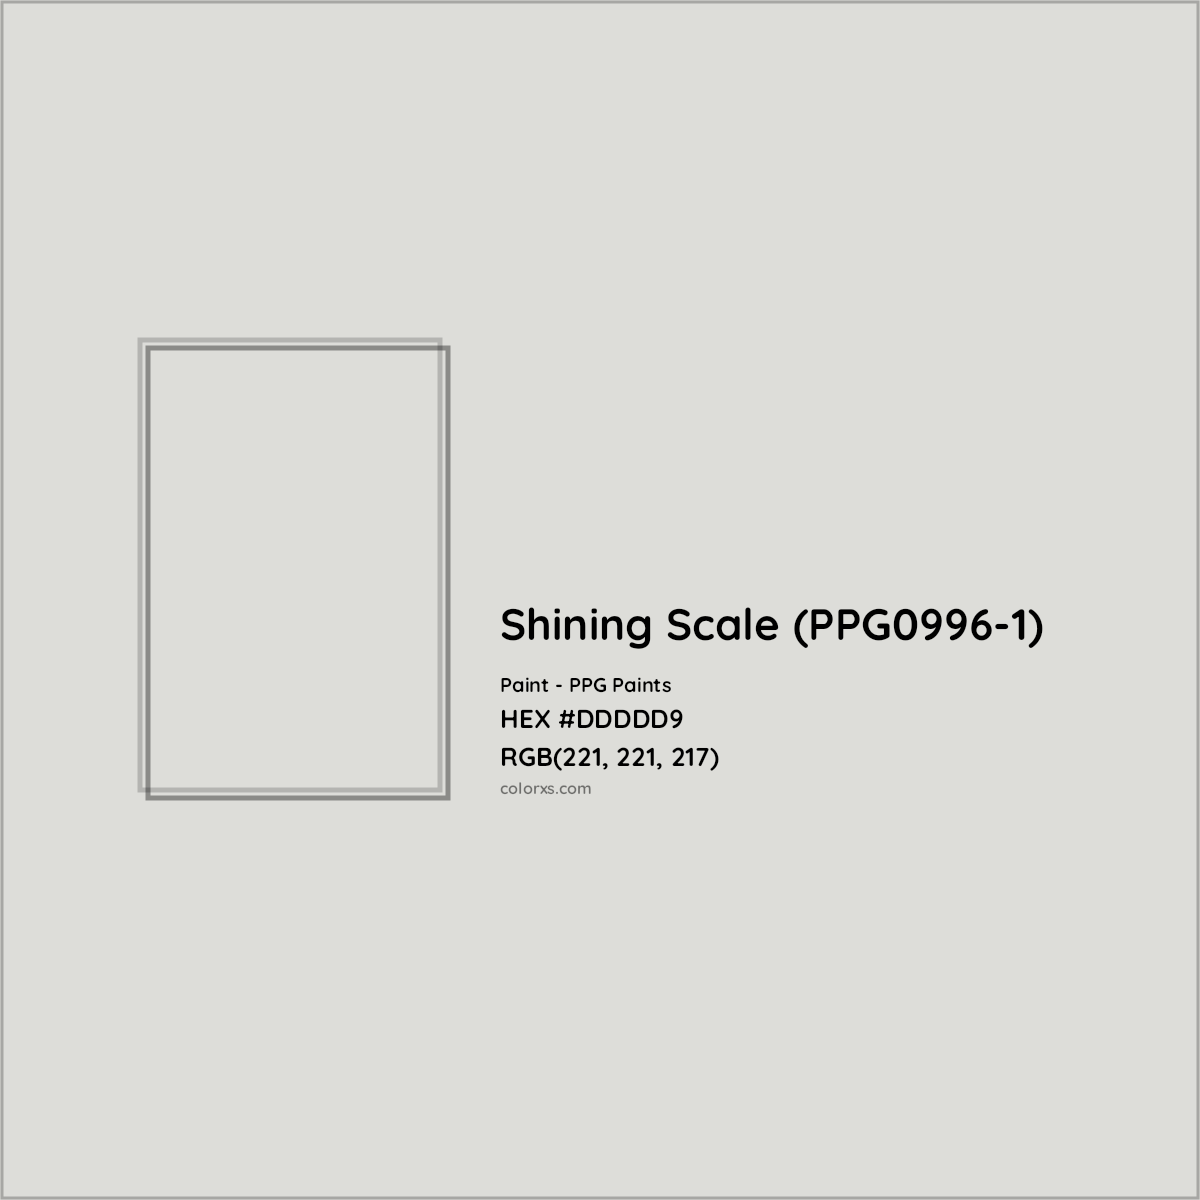 HEX #DDDDD9 Shining Scale (PPG0996-1) Paint PPG Paints - Color Code